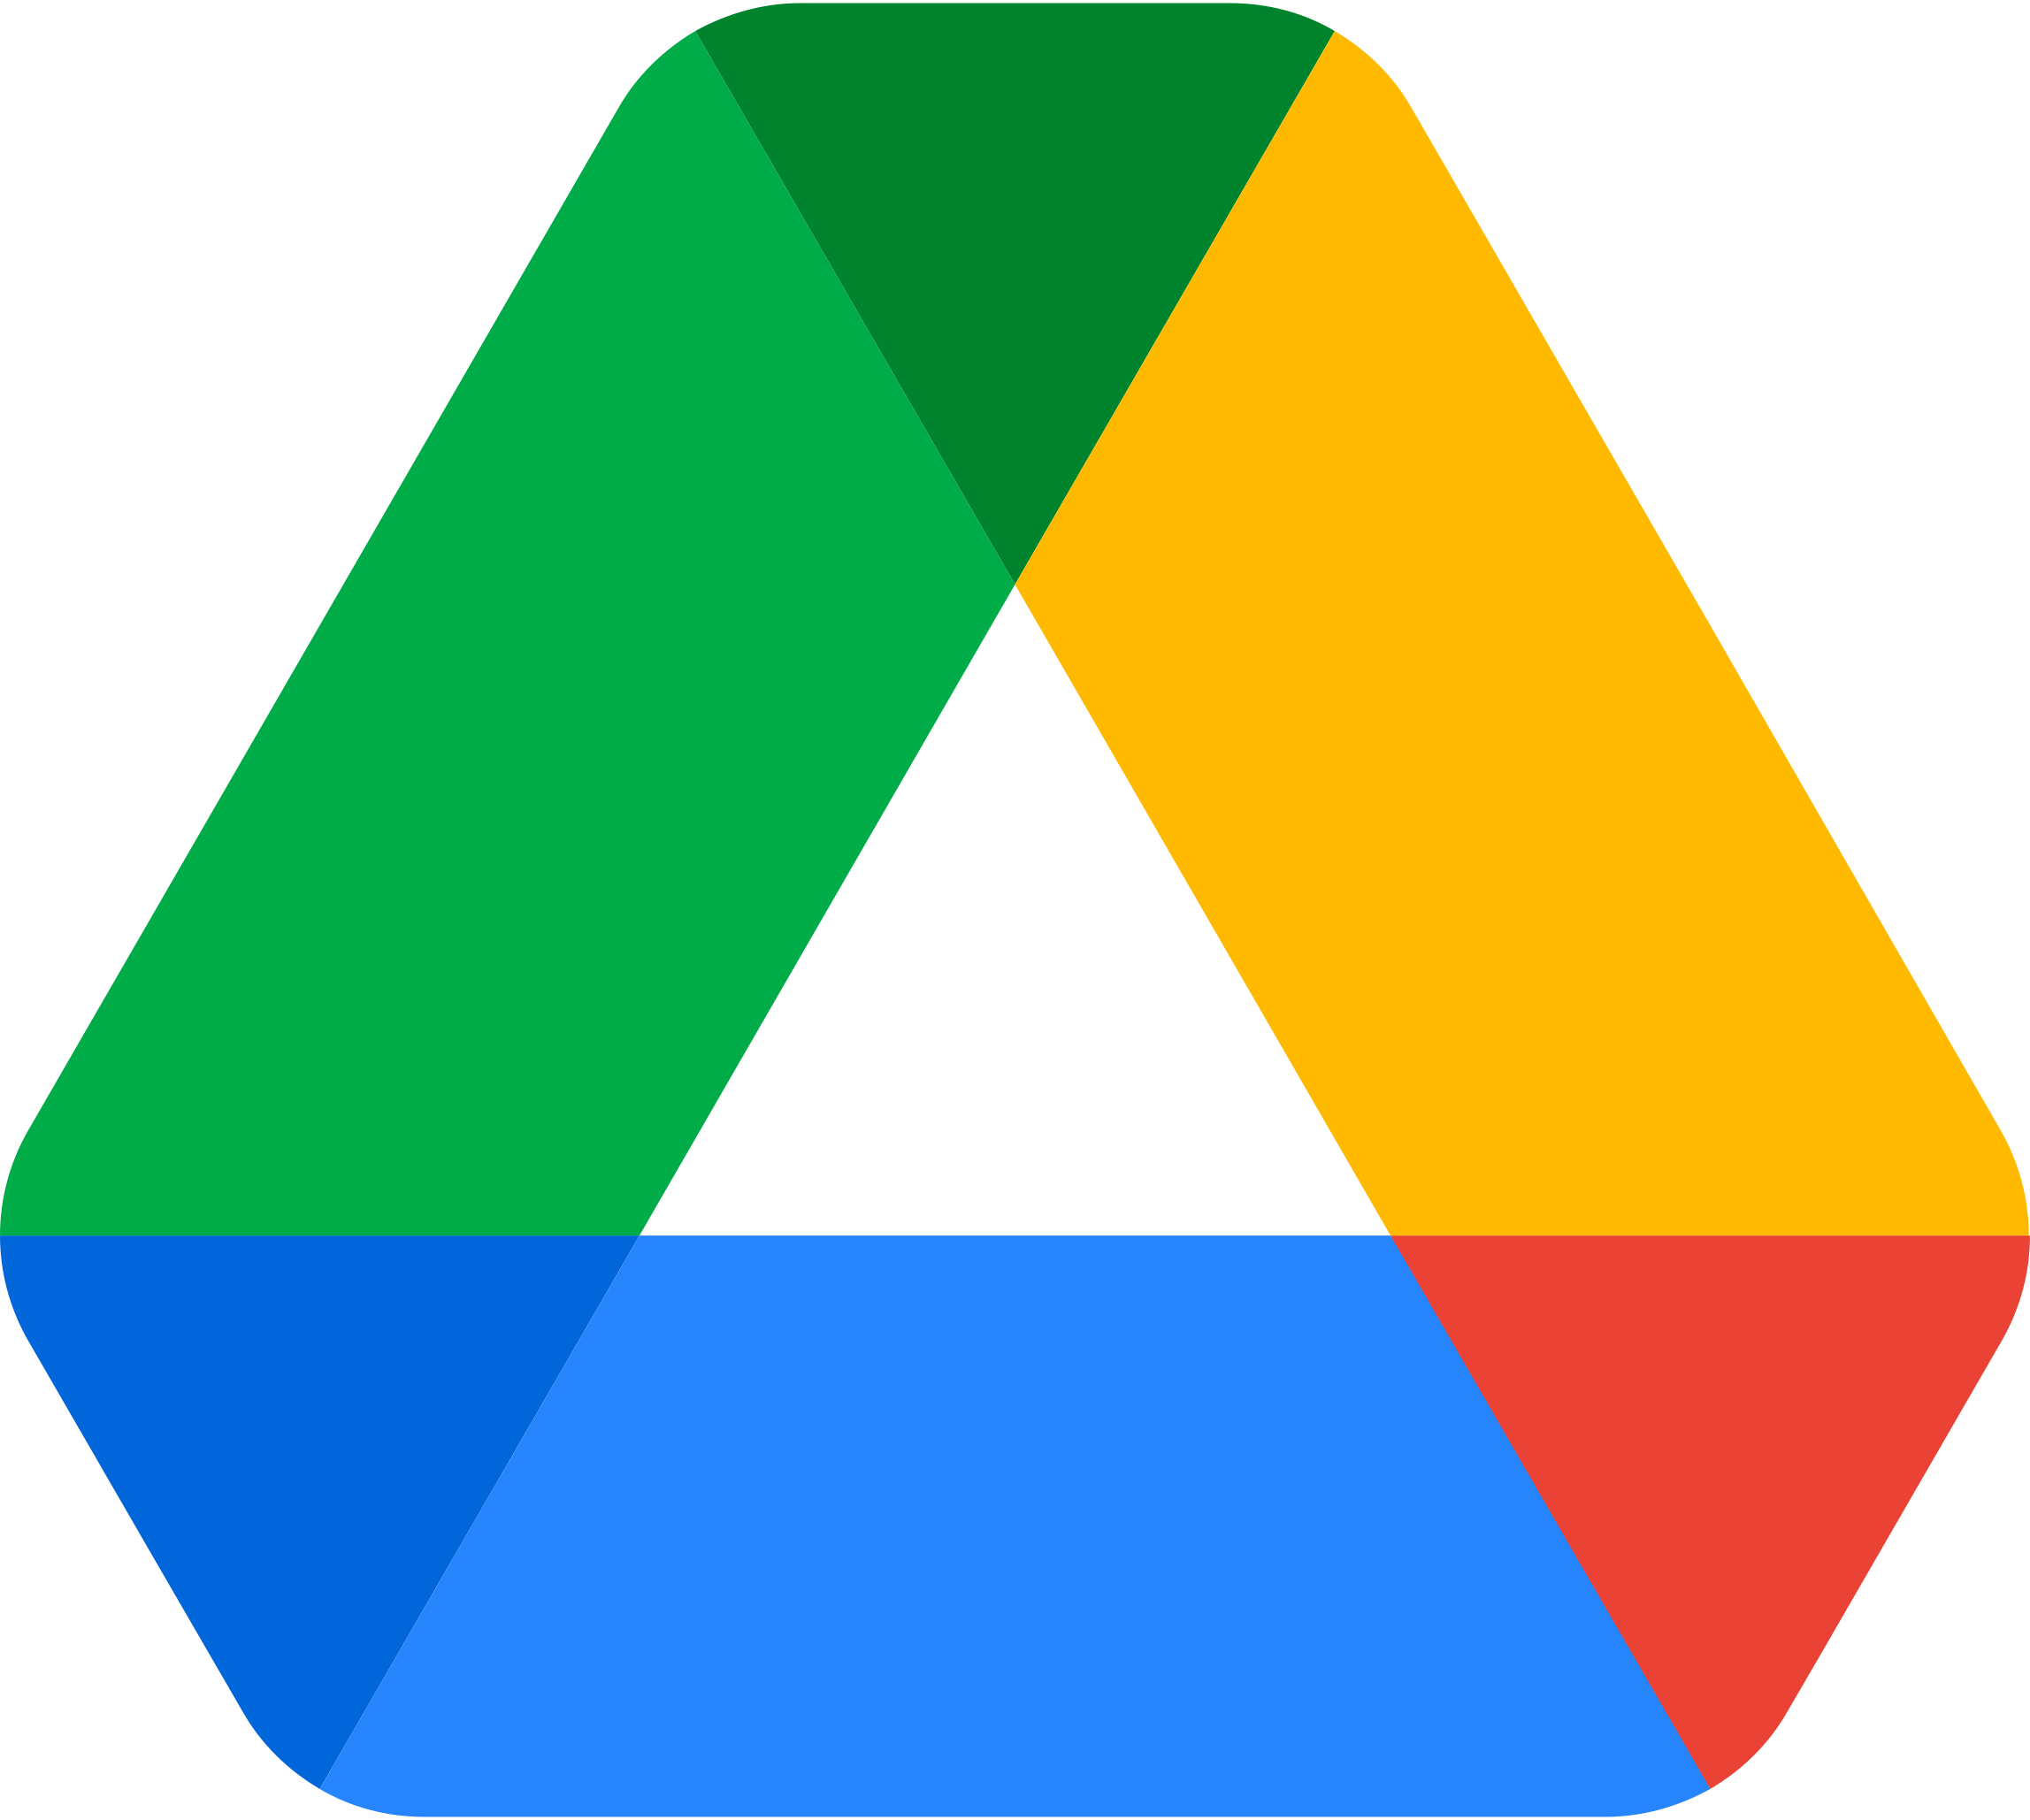 Google Drive logo, the cloud storage service by Google.